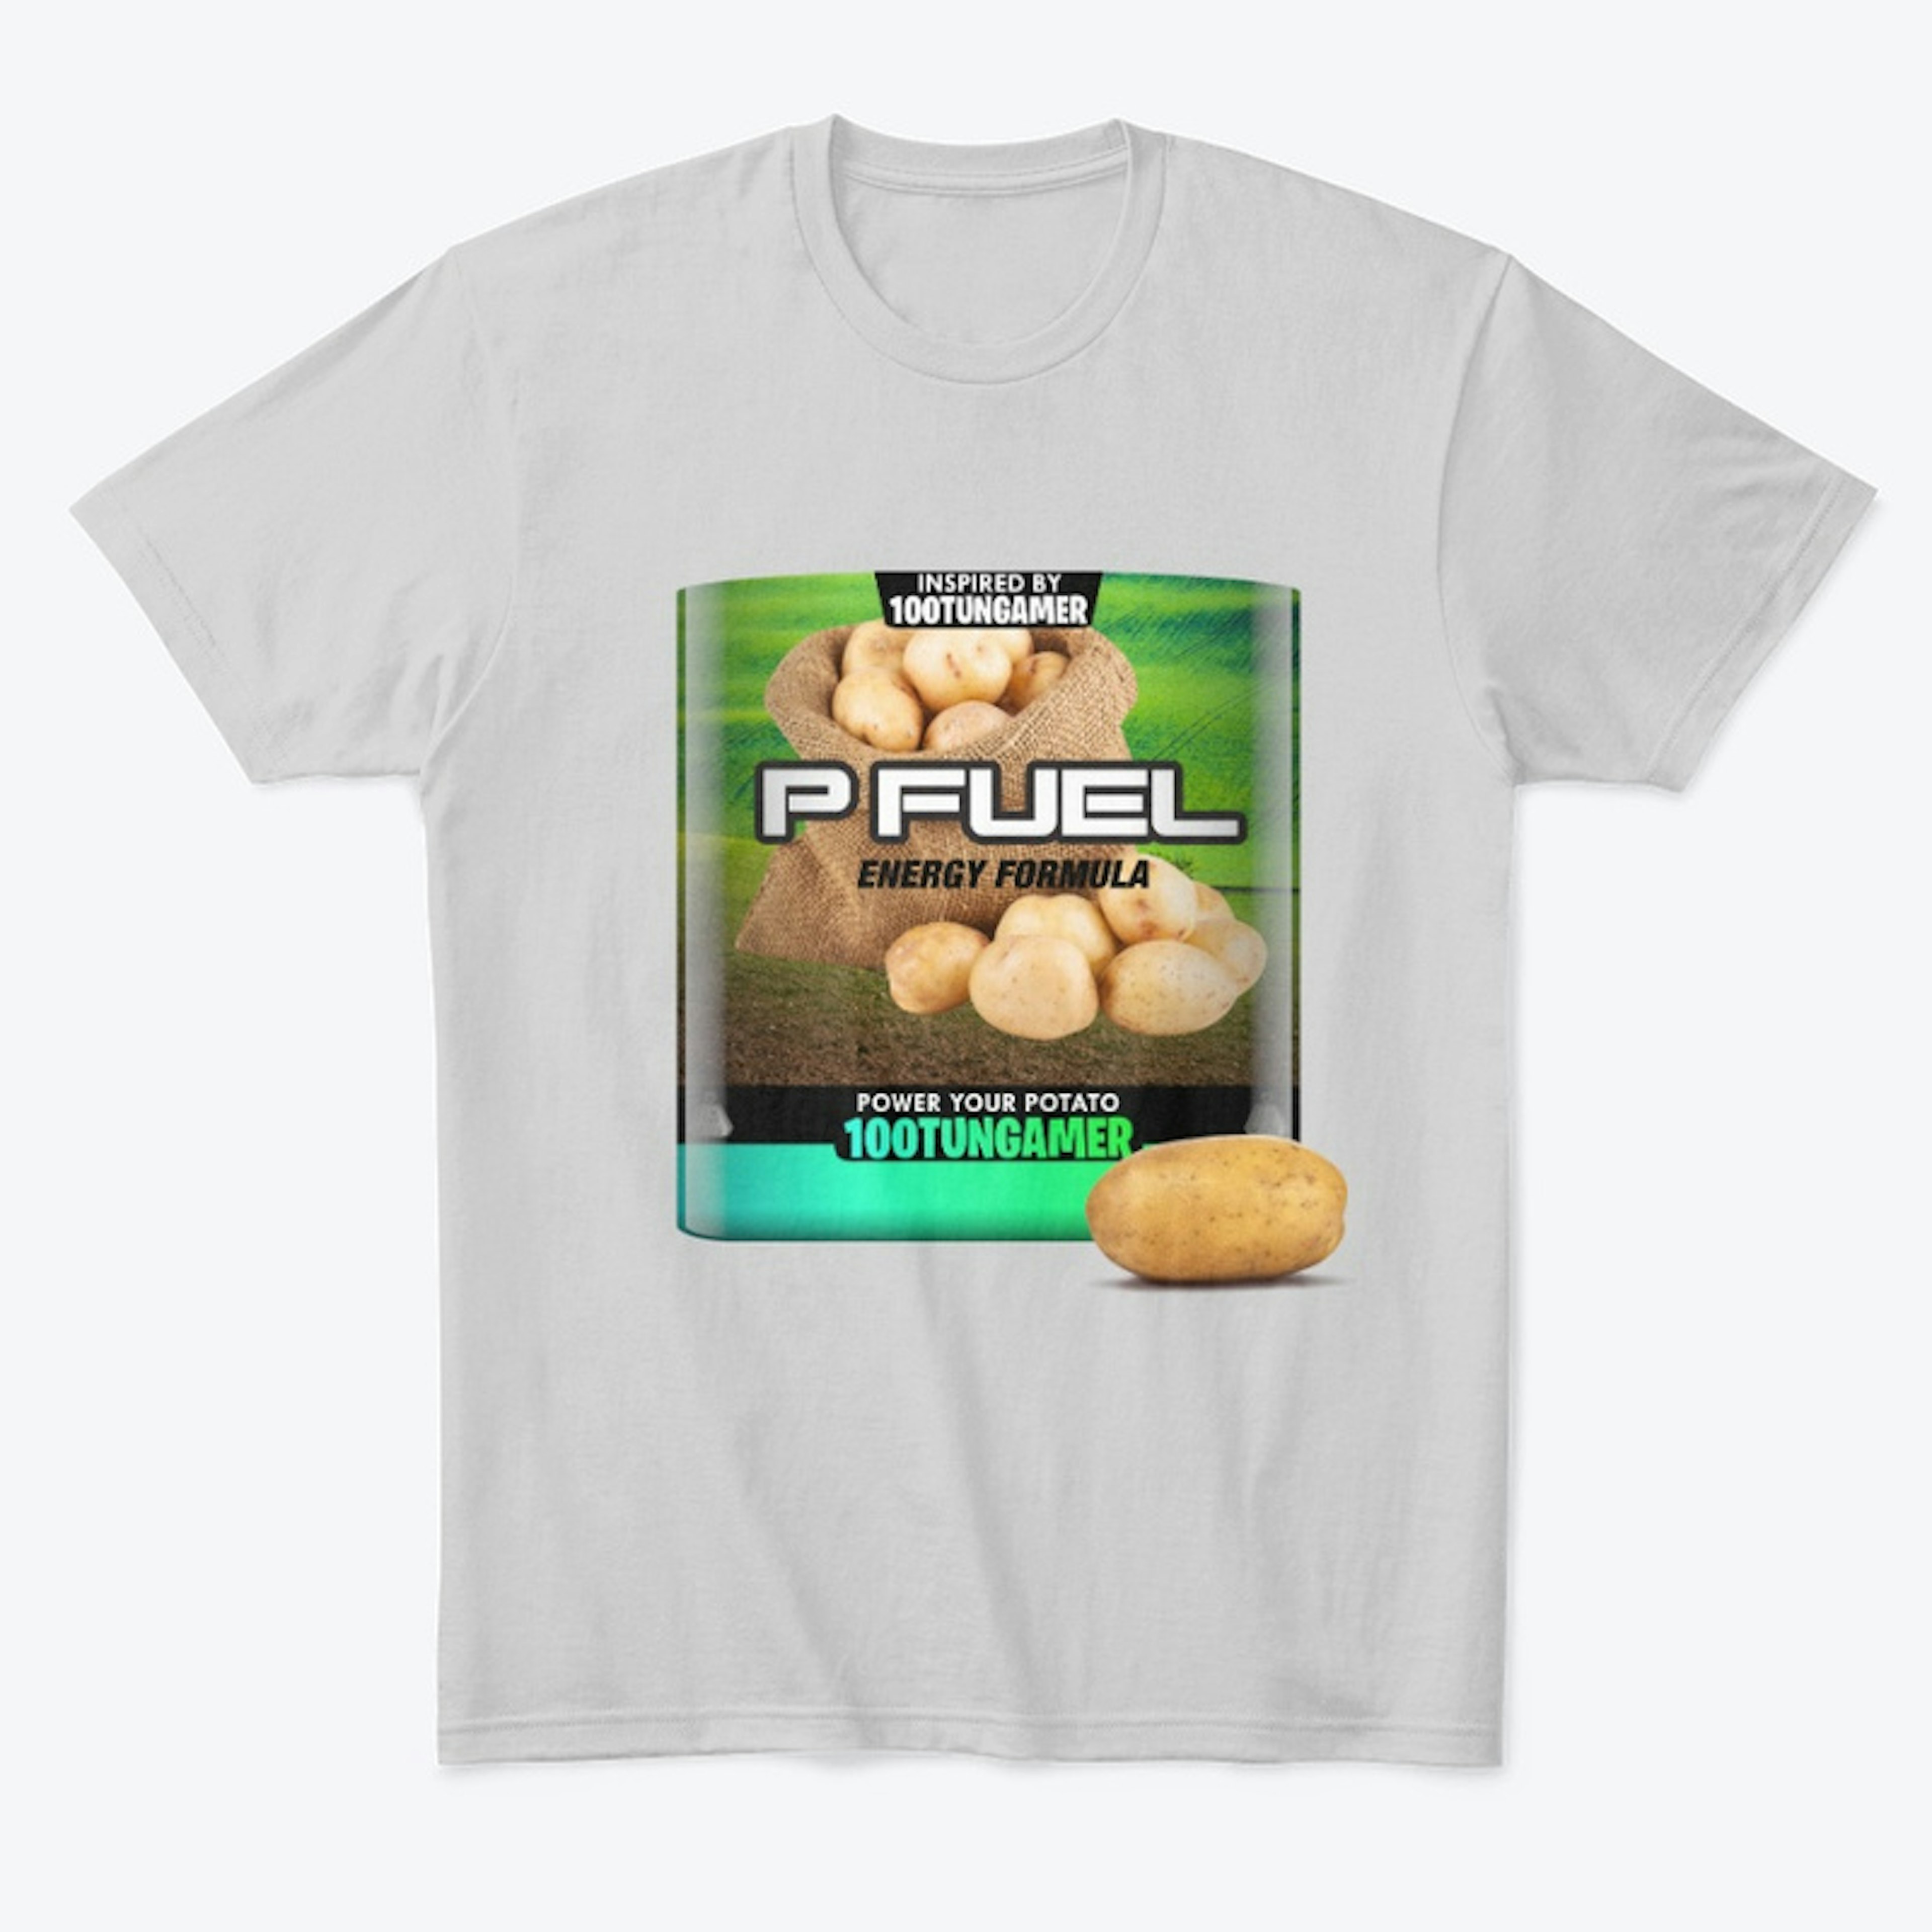 P-FUEL Power Your Potato